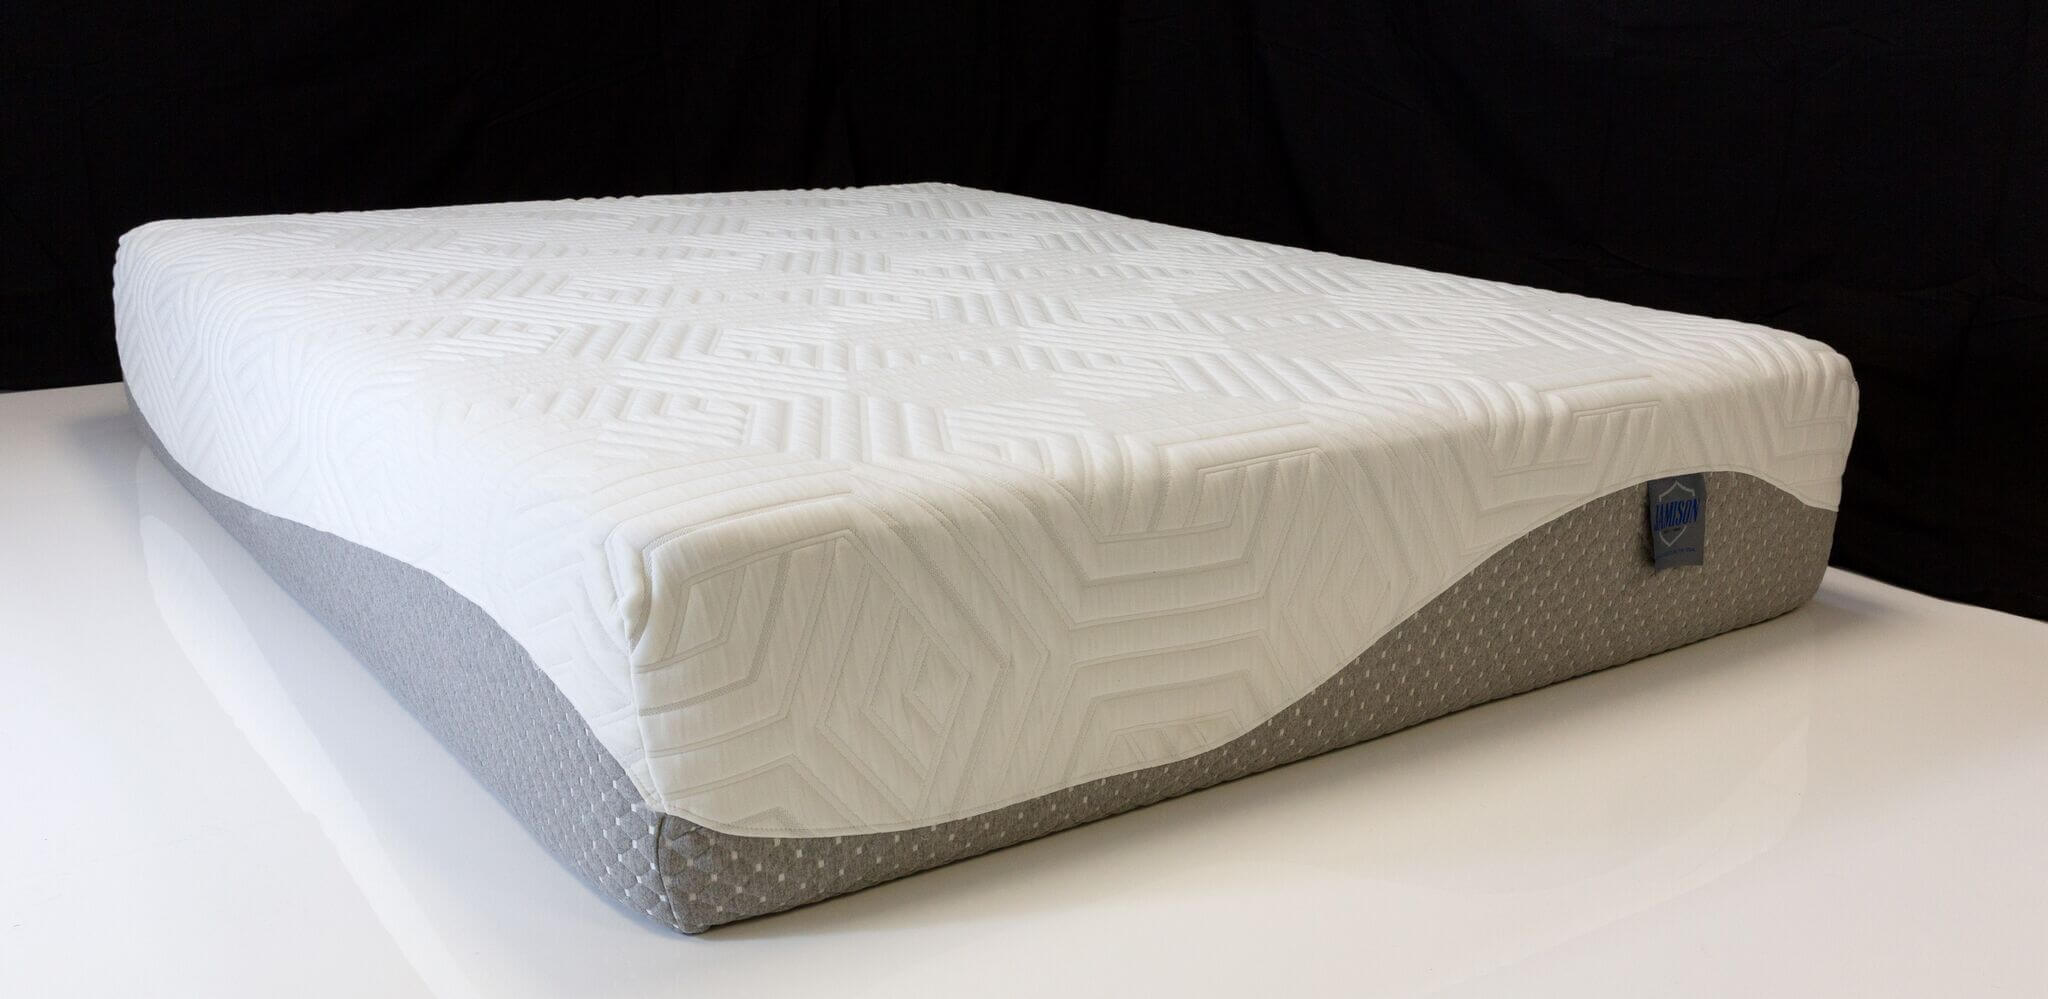 jamison napa latex mattress